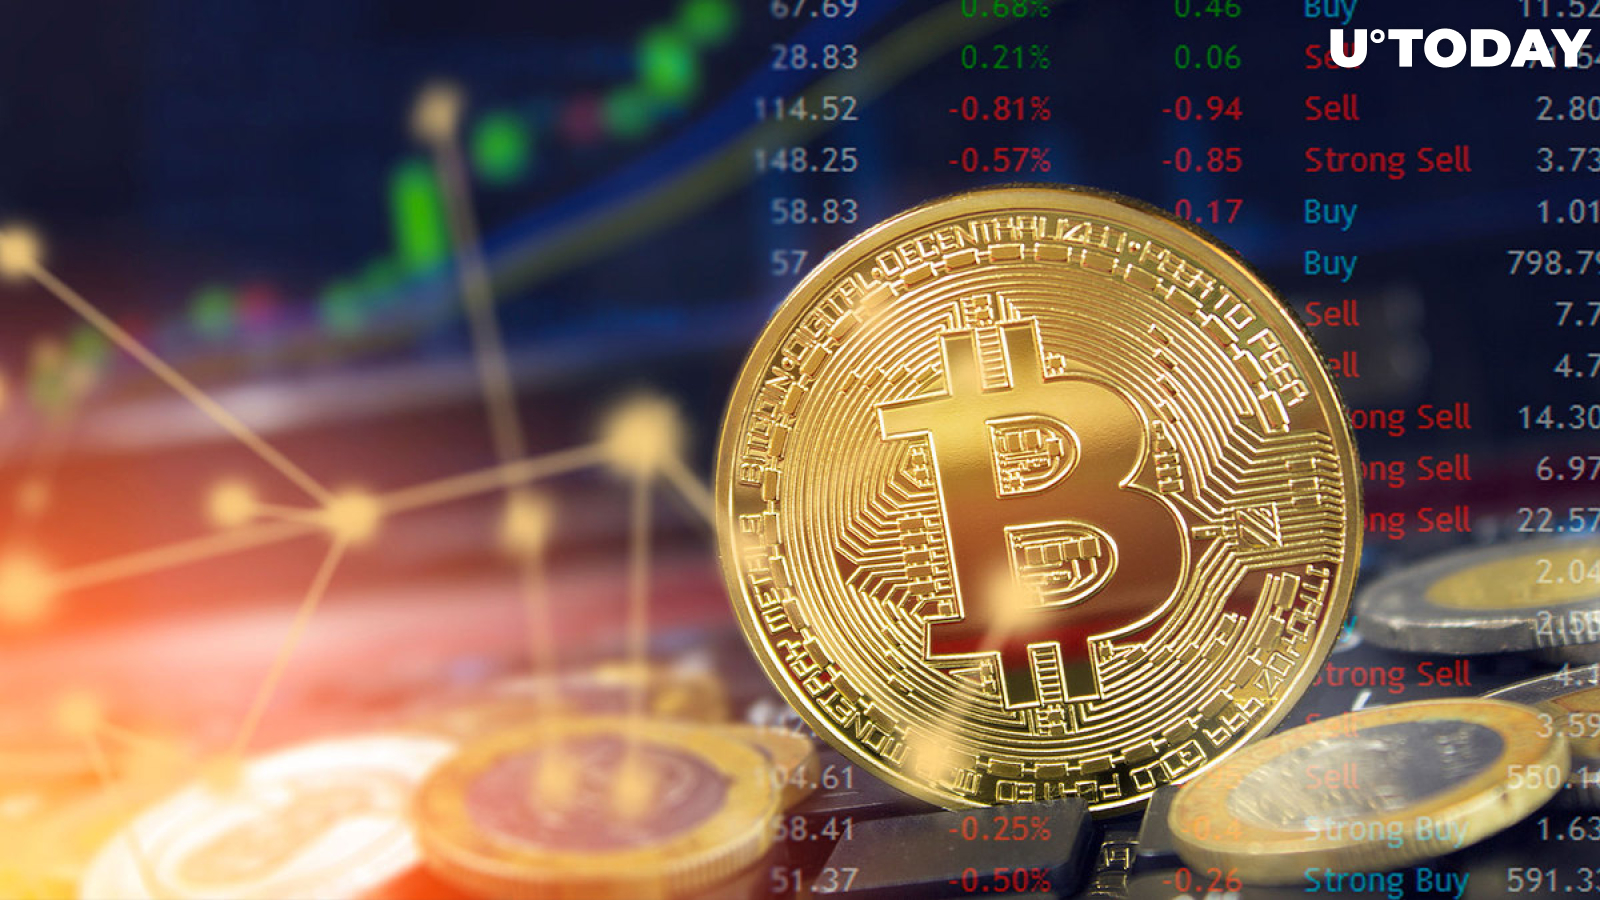 Self-proclaimed Satoshi plans to dump his BTC worth $50 billion as ‘Bitcoin has no utility’